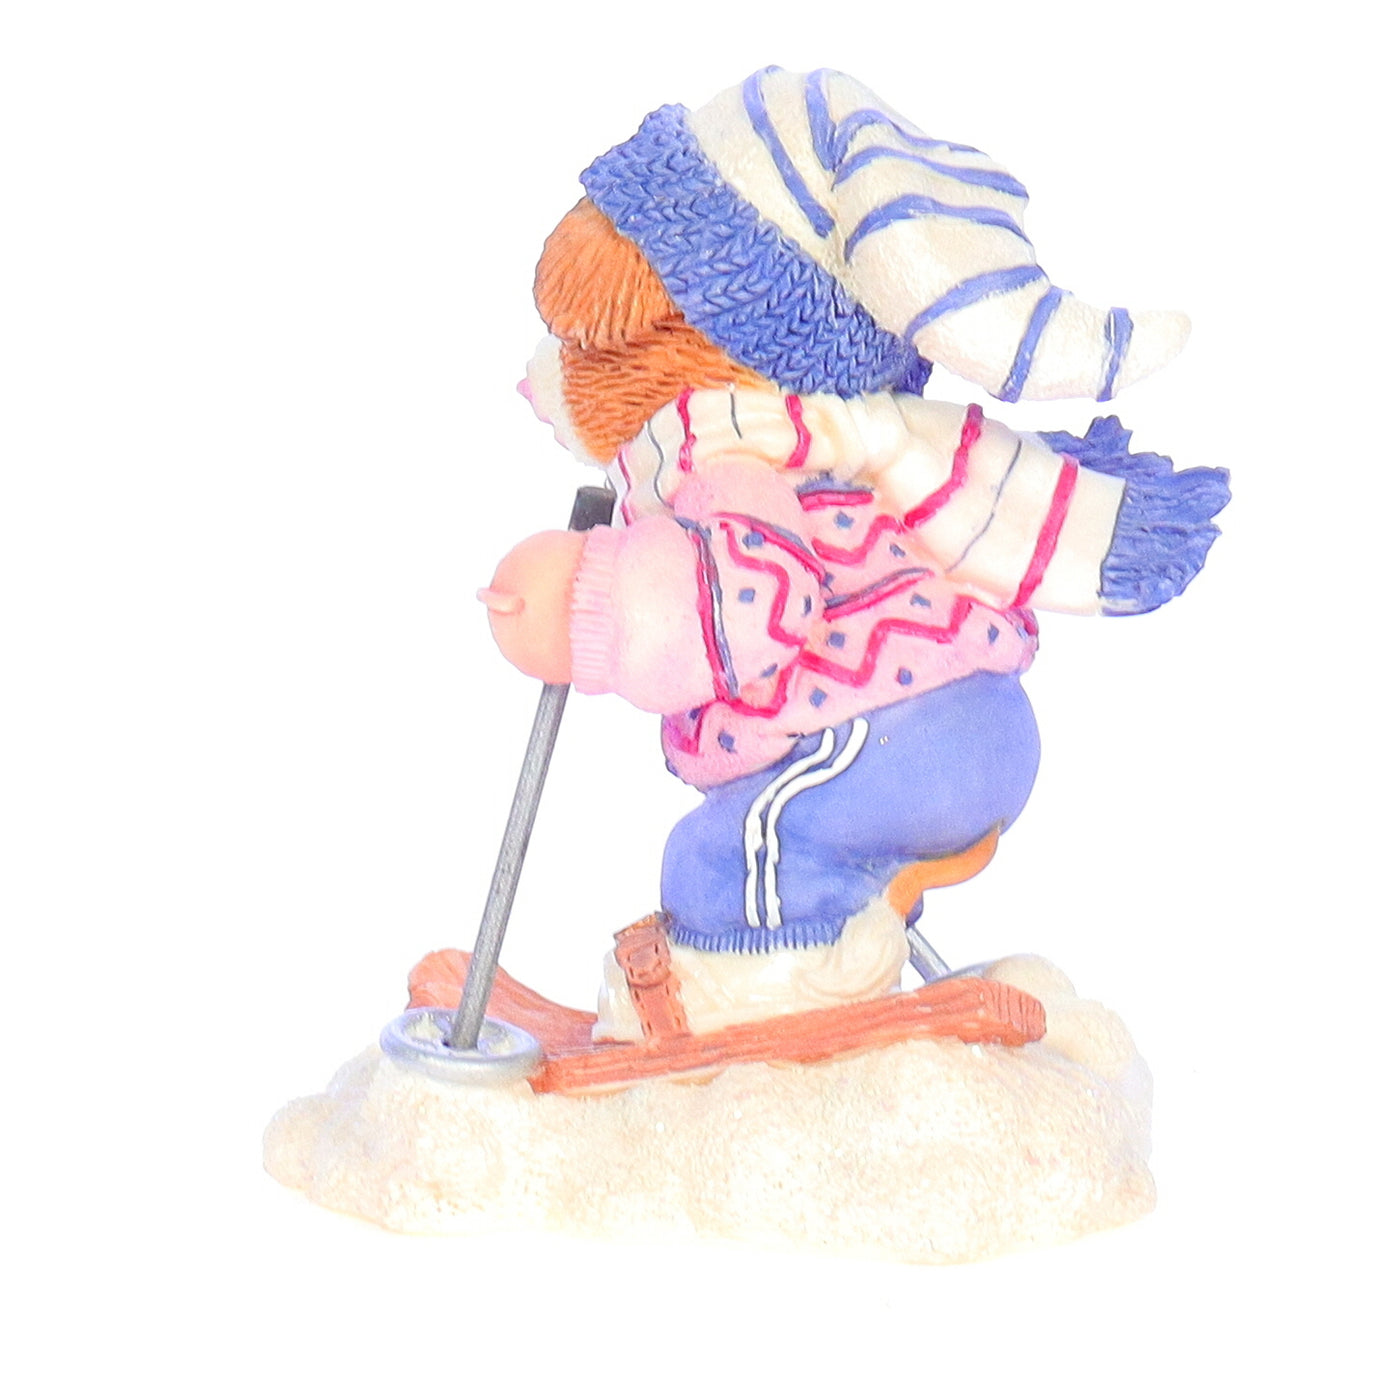 marys moo moos 548944 barn to ski christmas figurine 1999 back